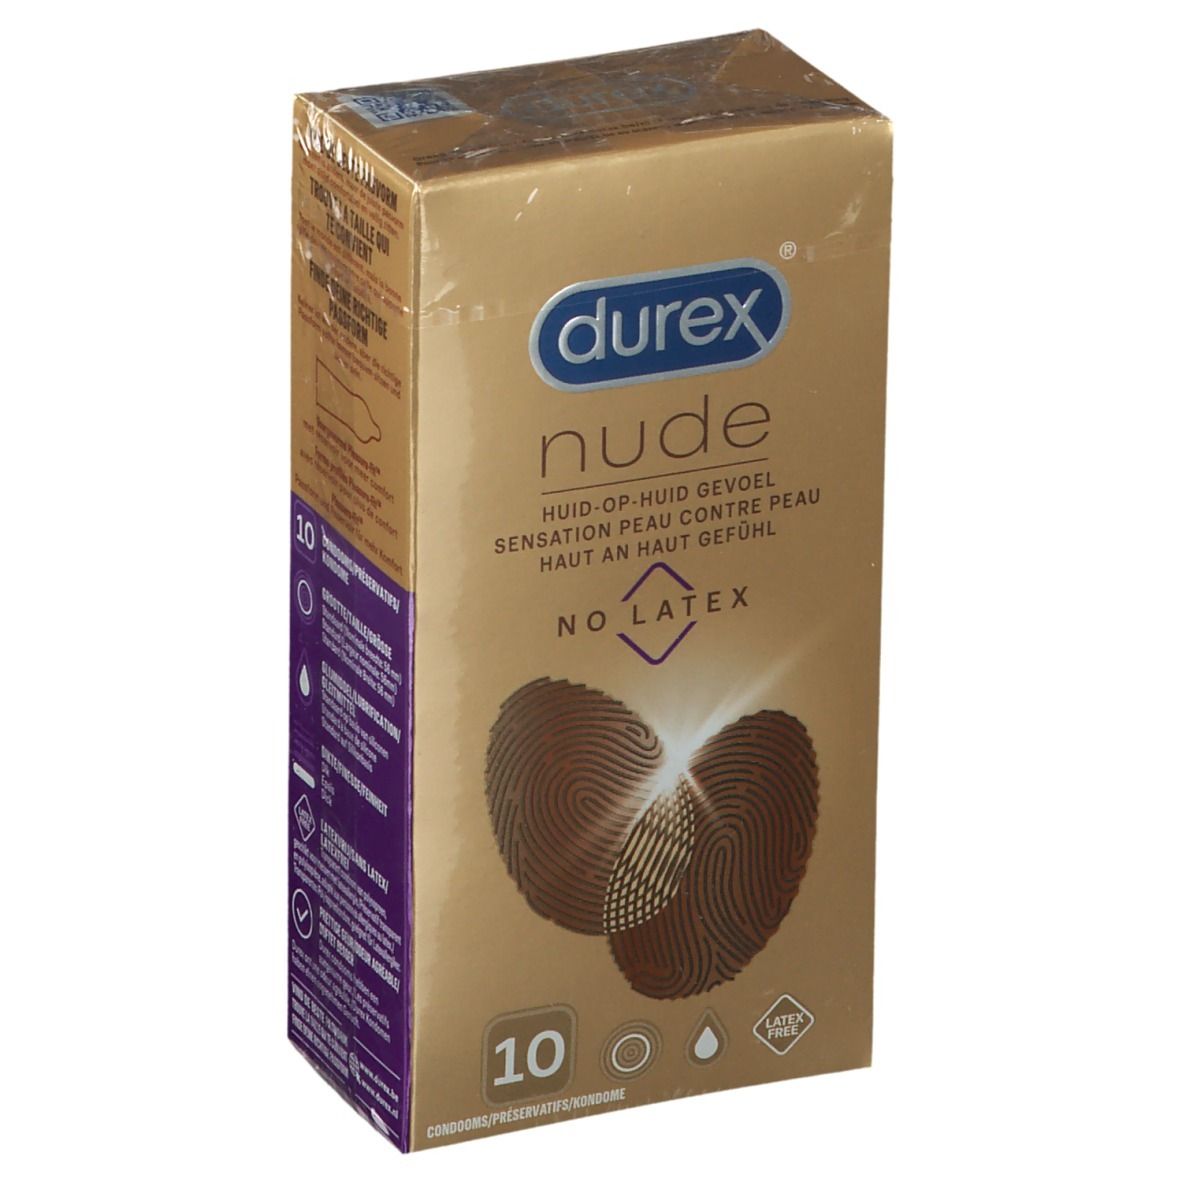 durex® Nude Kondome Latexfrei Gefühl Haut an Haut